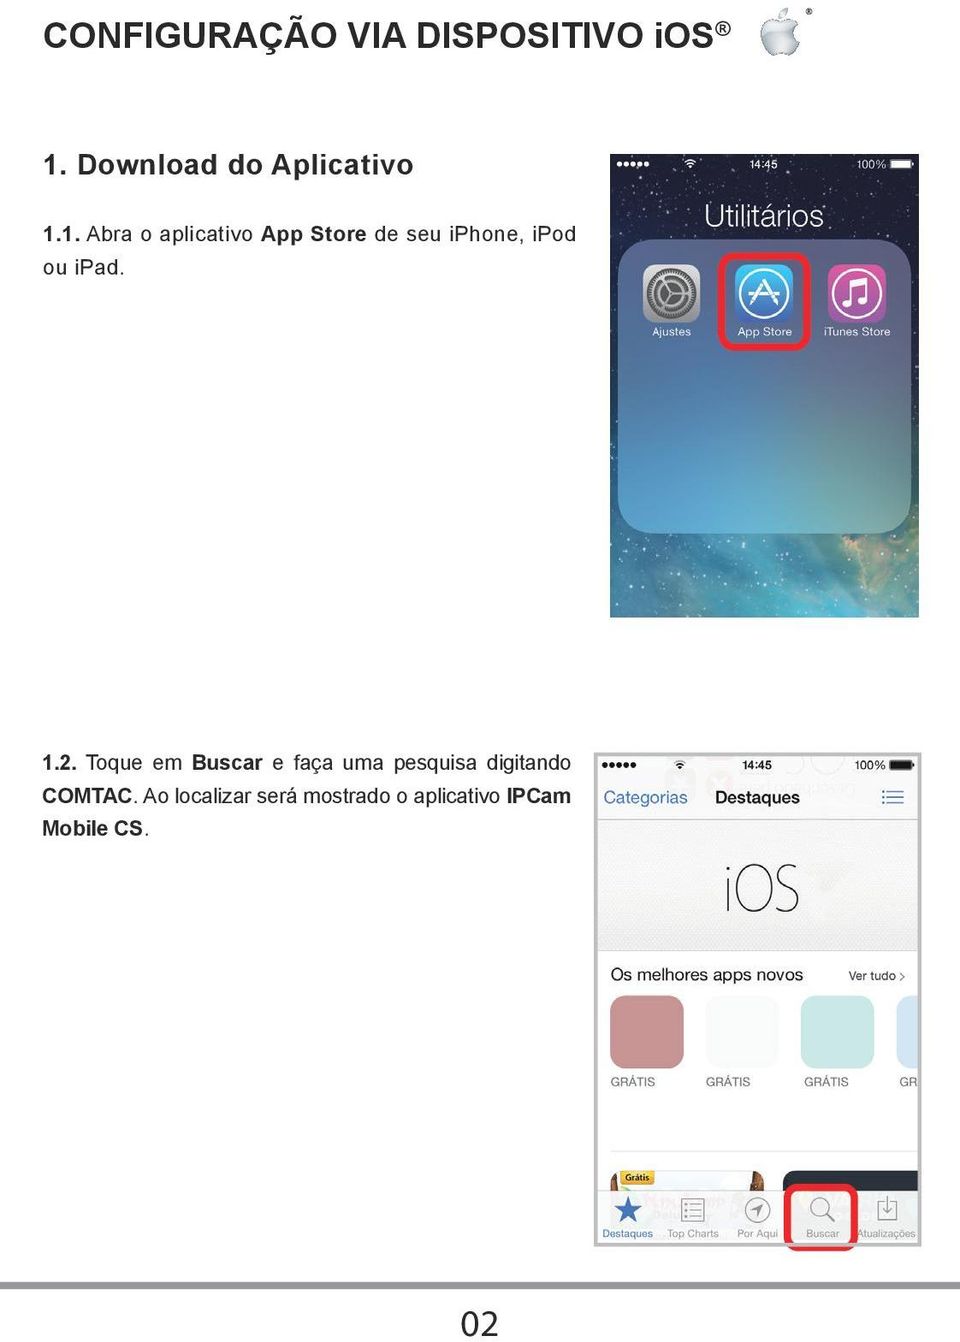 1. Abra o aplicativo App Store de seu iphone, ipod ou ipad.